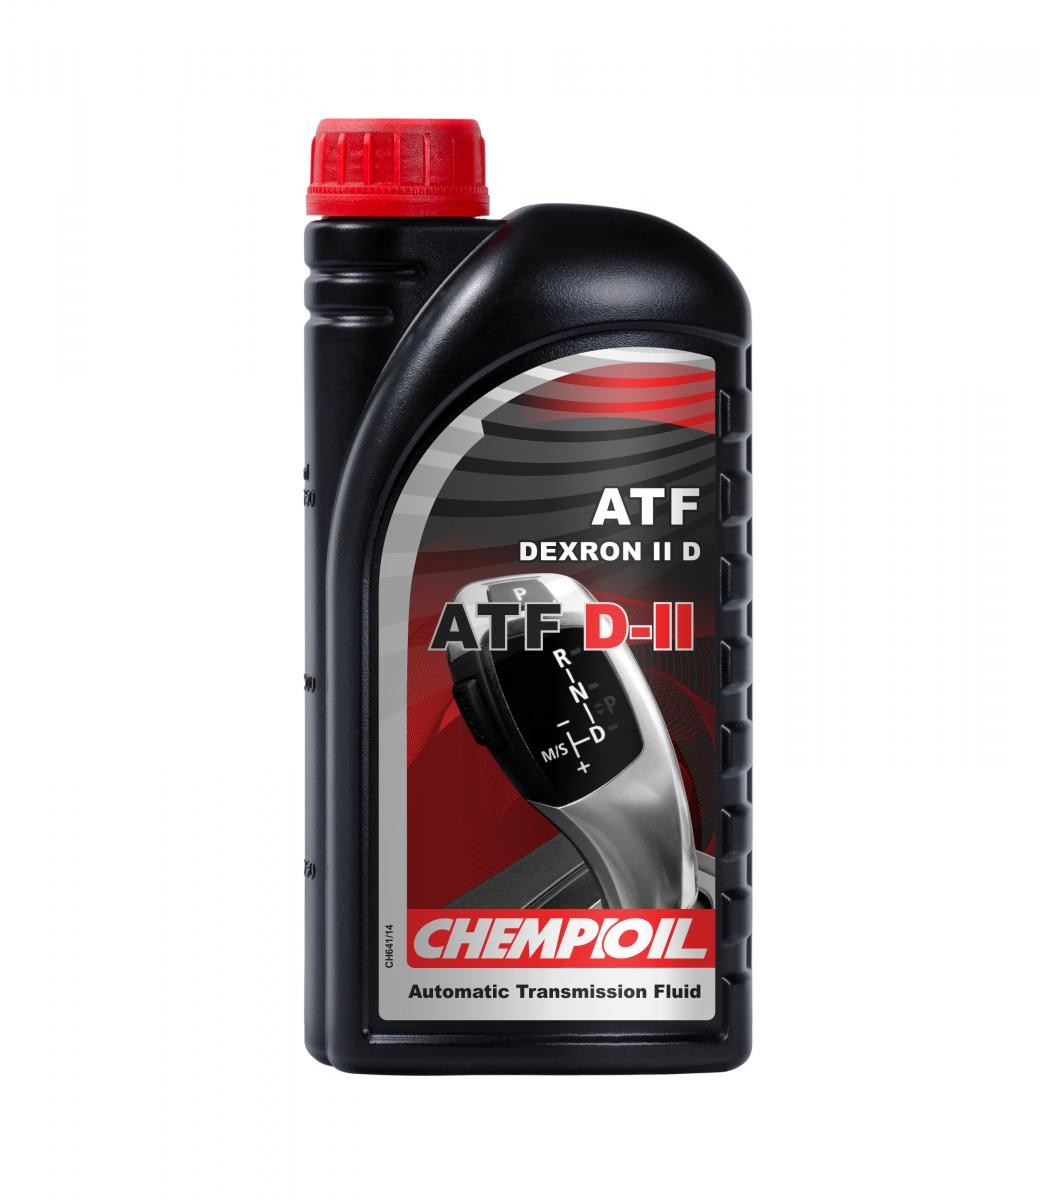 CHEMPIOIL ATF, D-II ATF IID, 1l, red Automatic transmission oil CH8901-1 buy